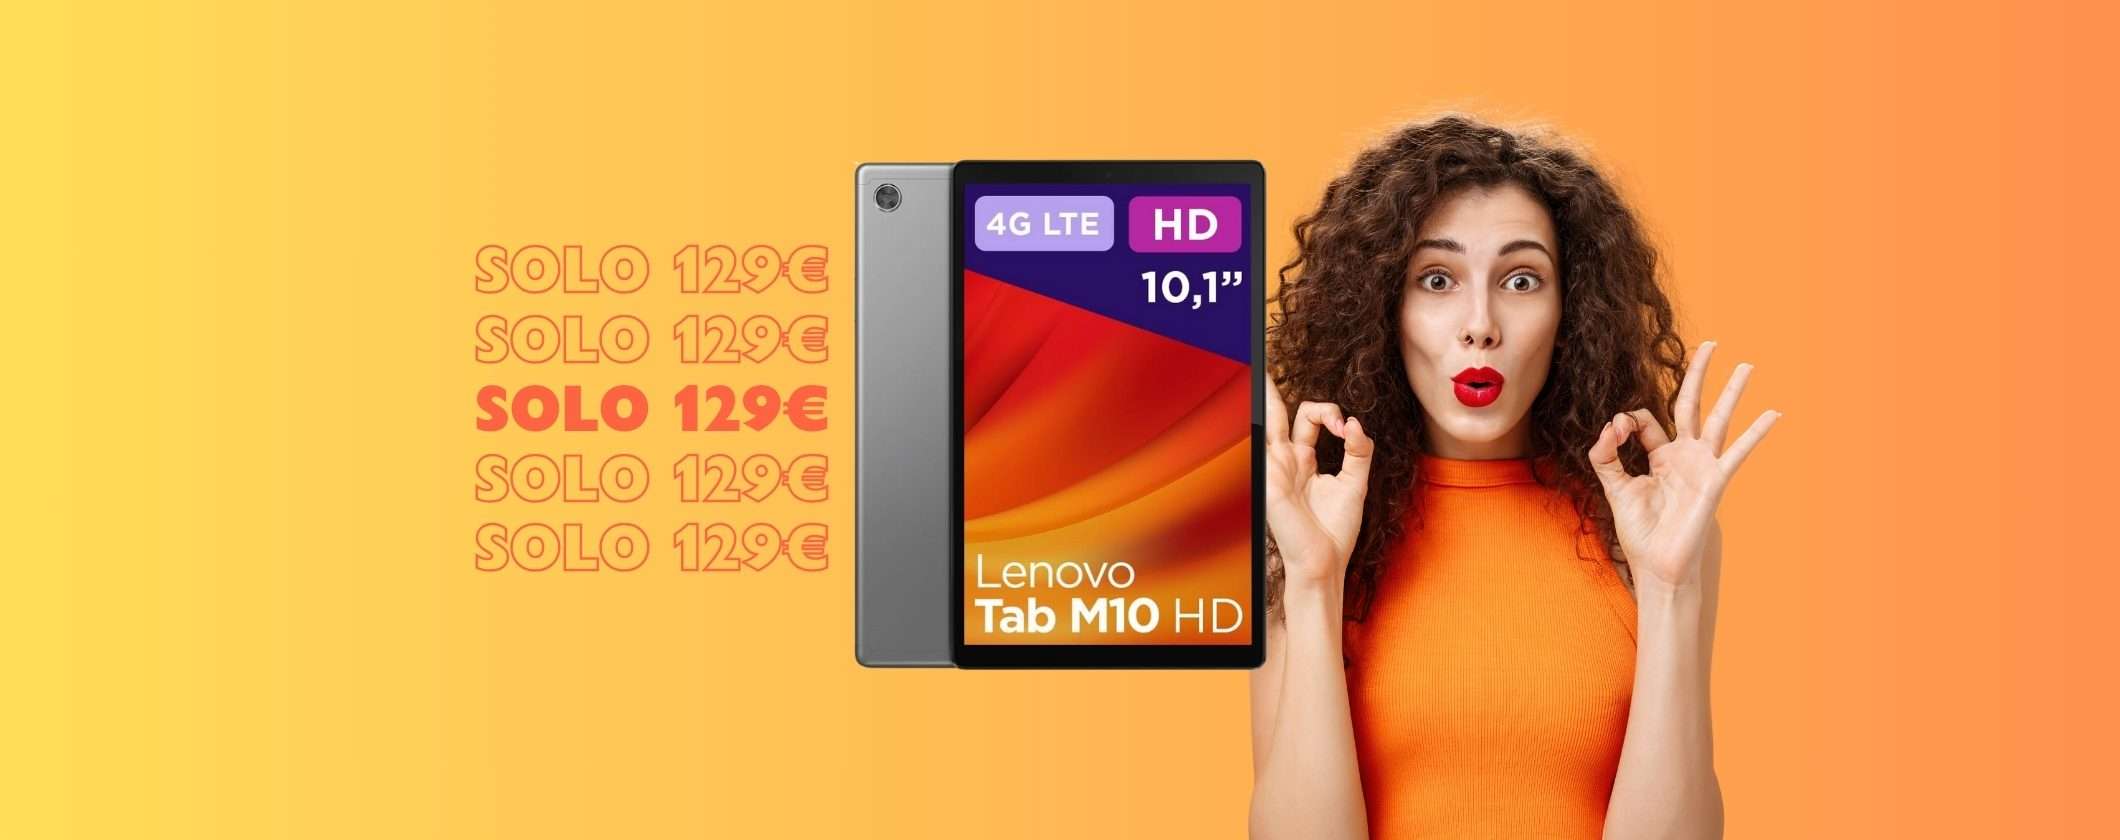 Lenovo Tab M10: OTTIMO tablet a soli 129€ su Amazon